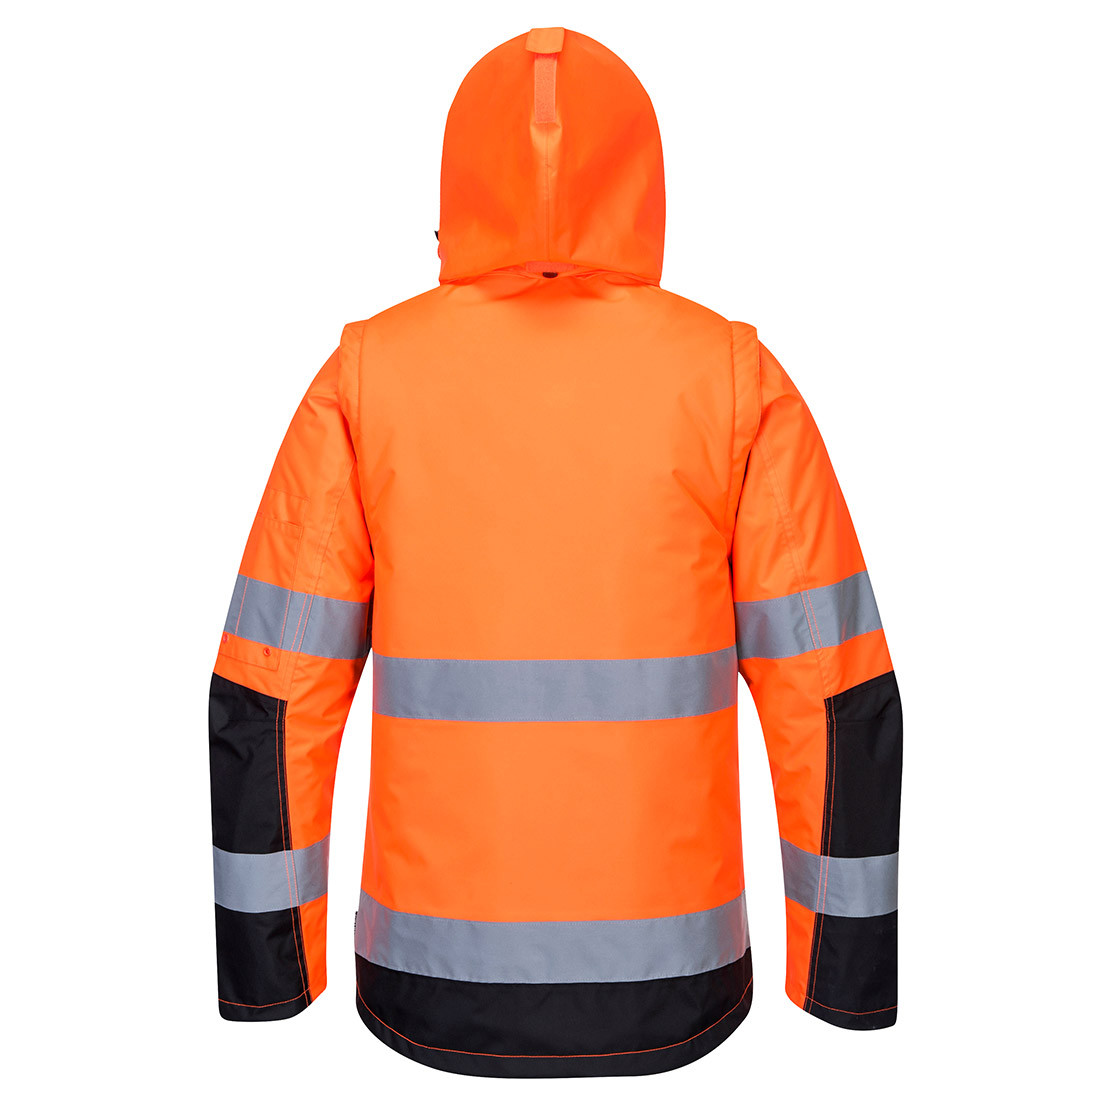 Pro Hi-Vis 3in1 Jacket - Safetywear